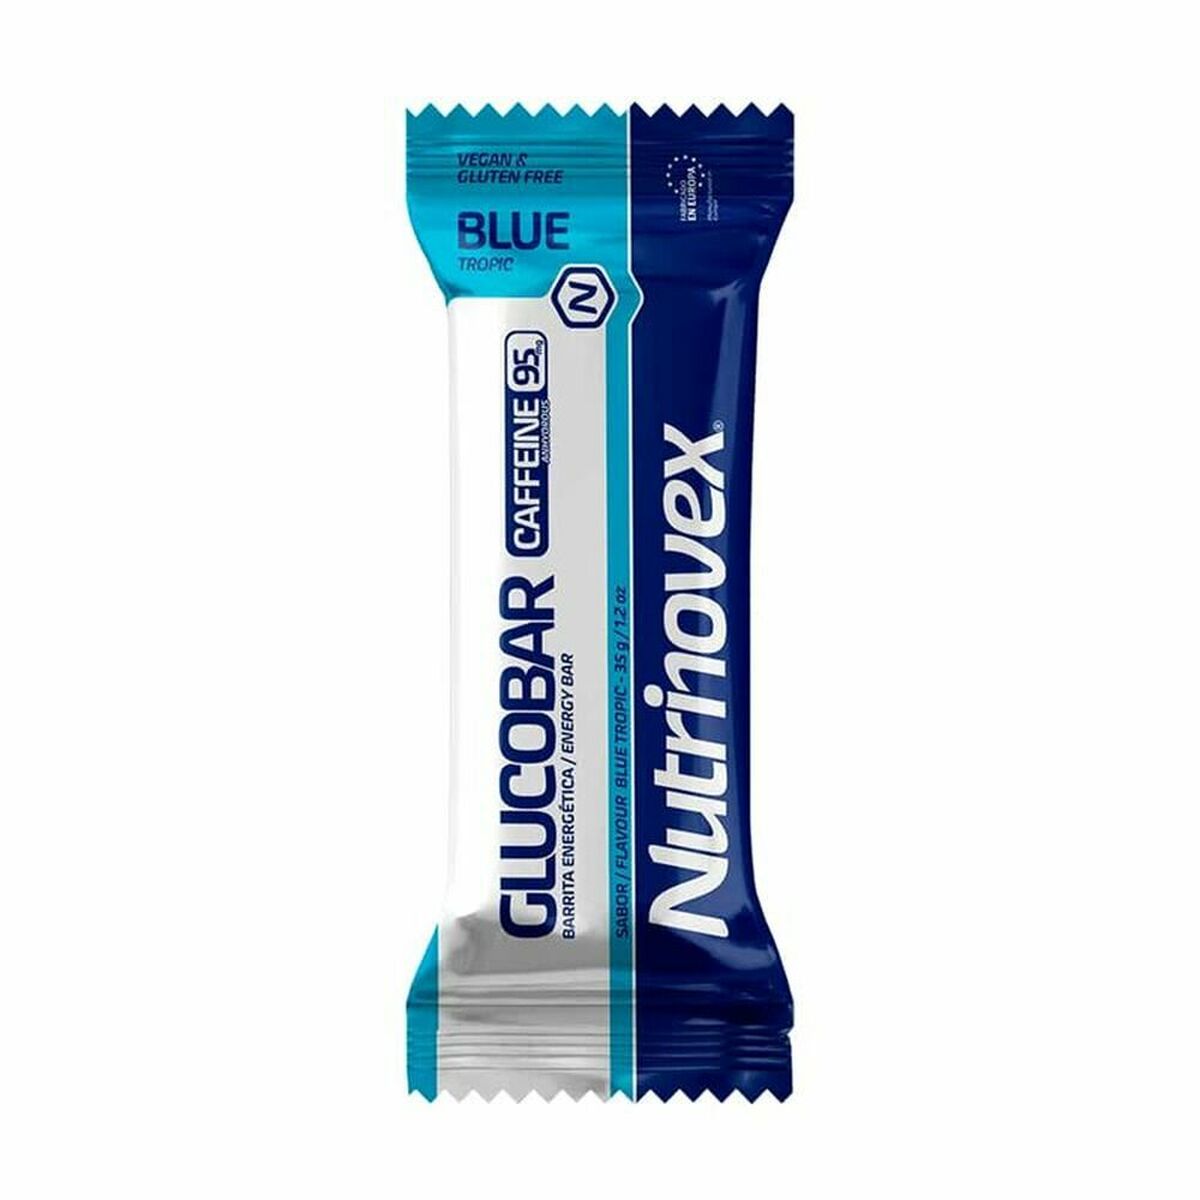 Energy bar Glucobar Nutrinovex  Blue Tropic  Caffeine